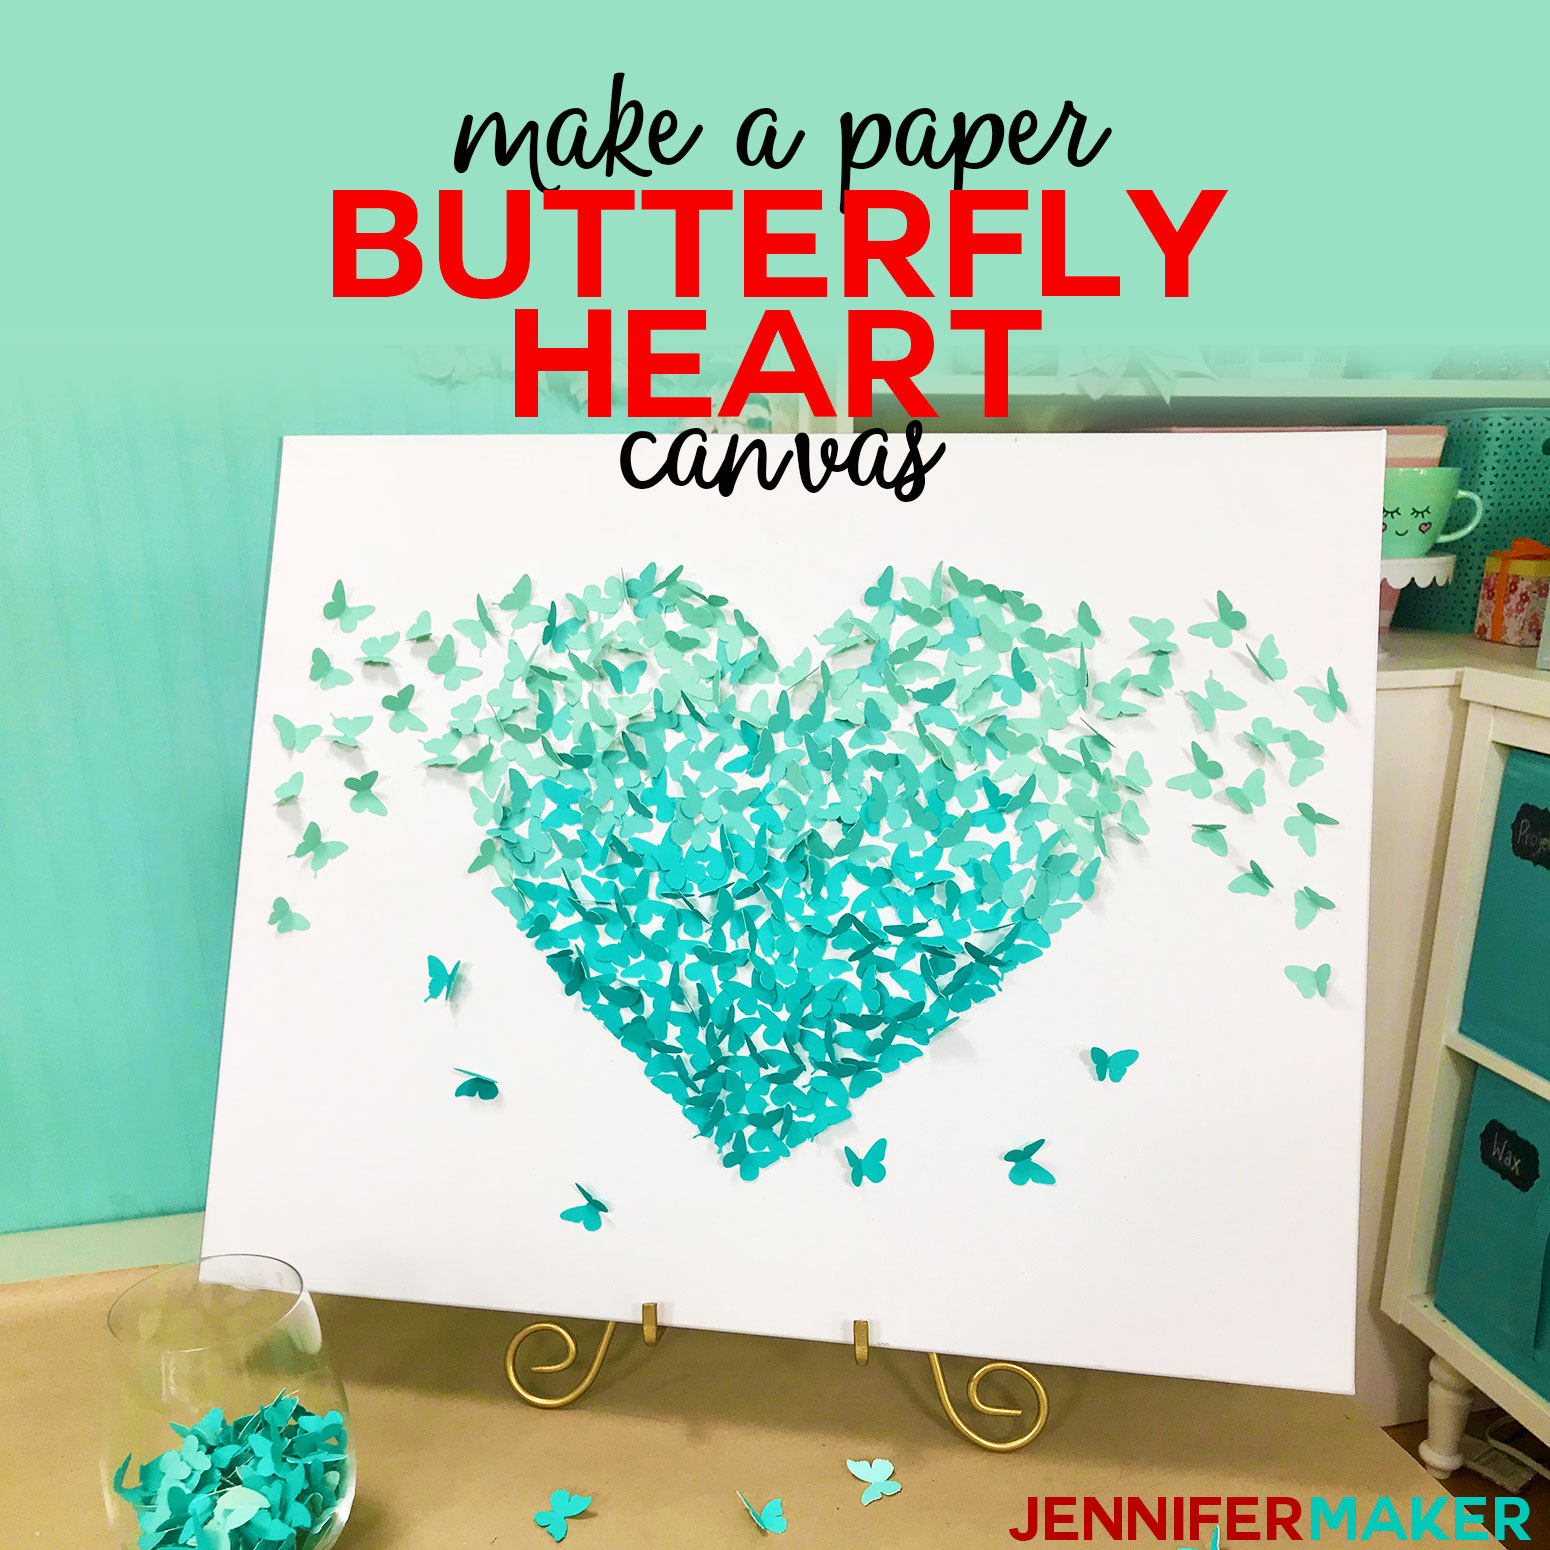 Paper Butterfly Canvas Wall Art Heart on Cricut